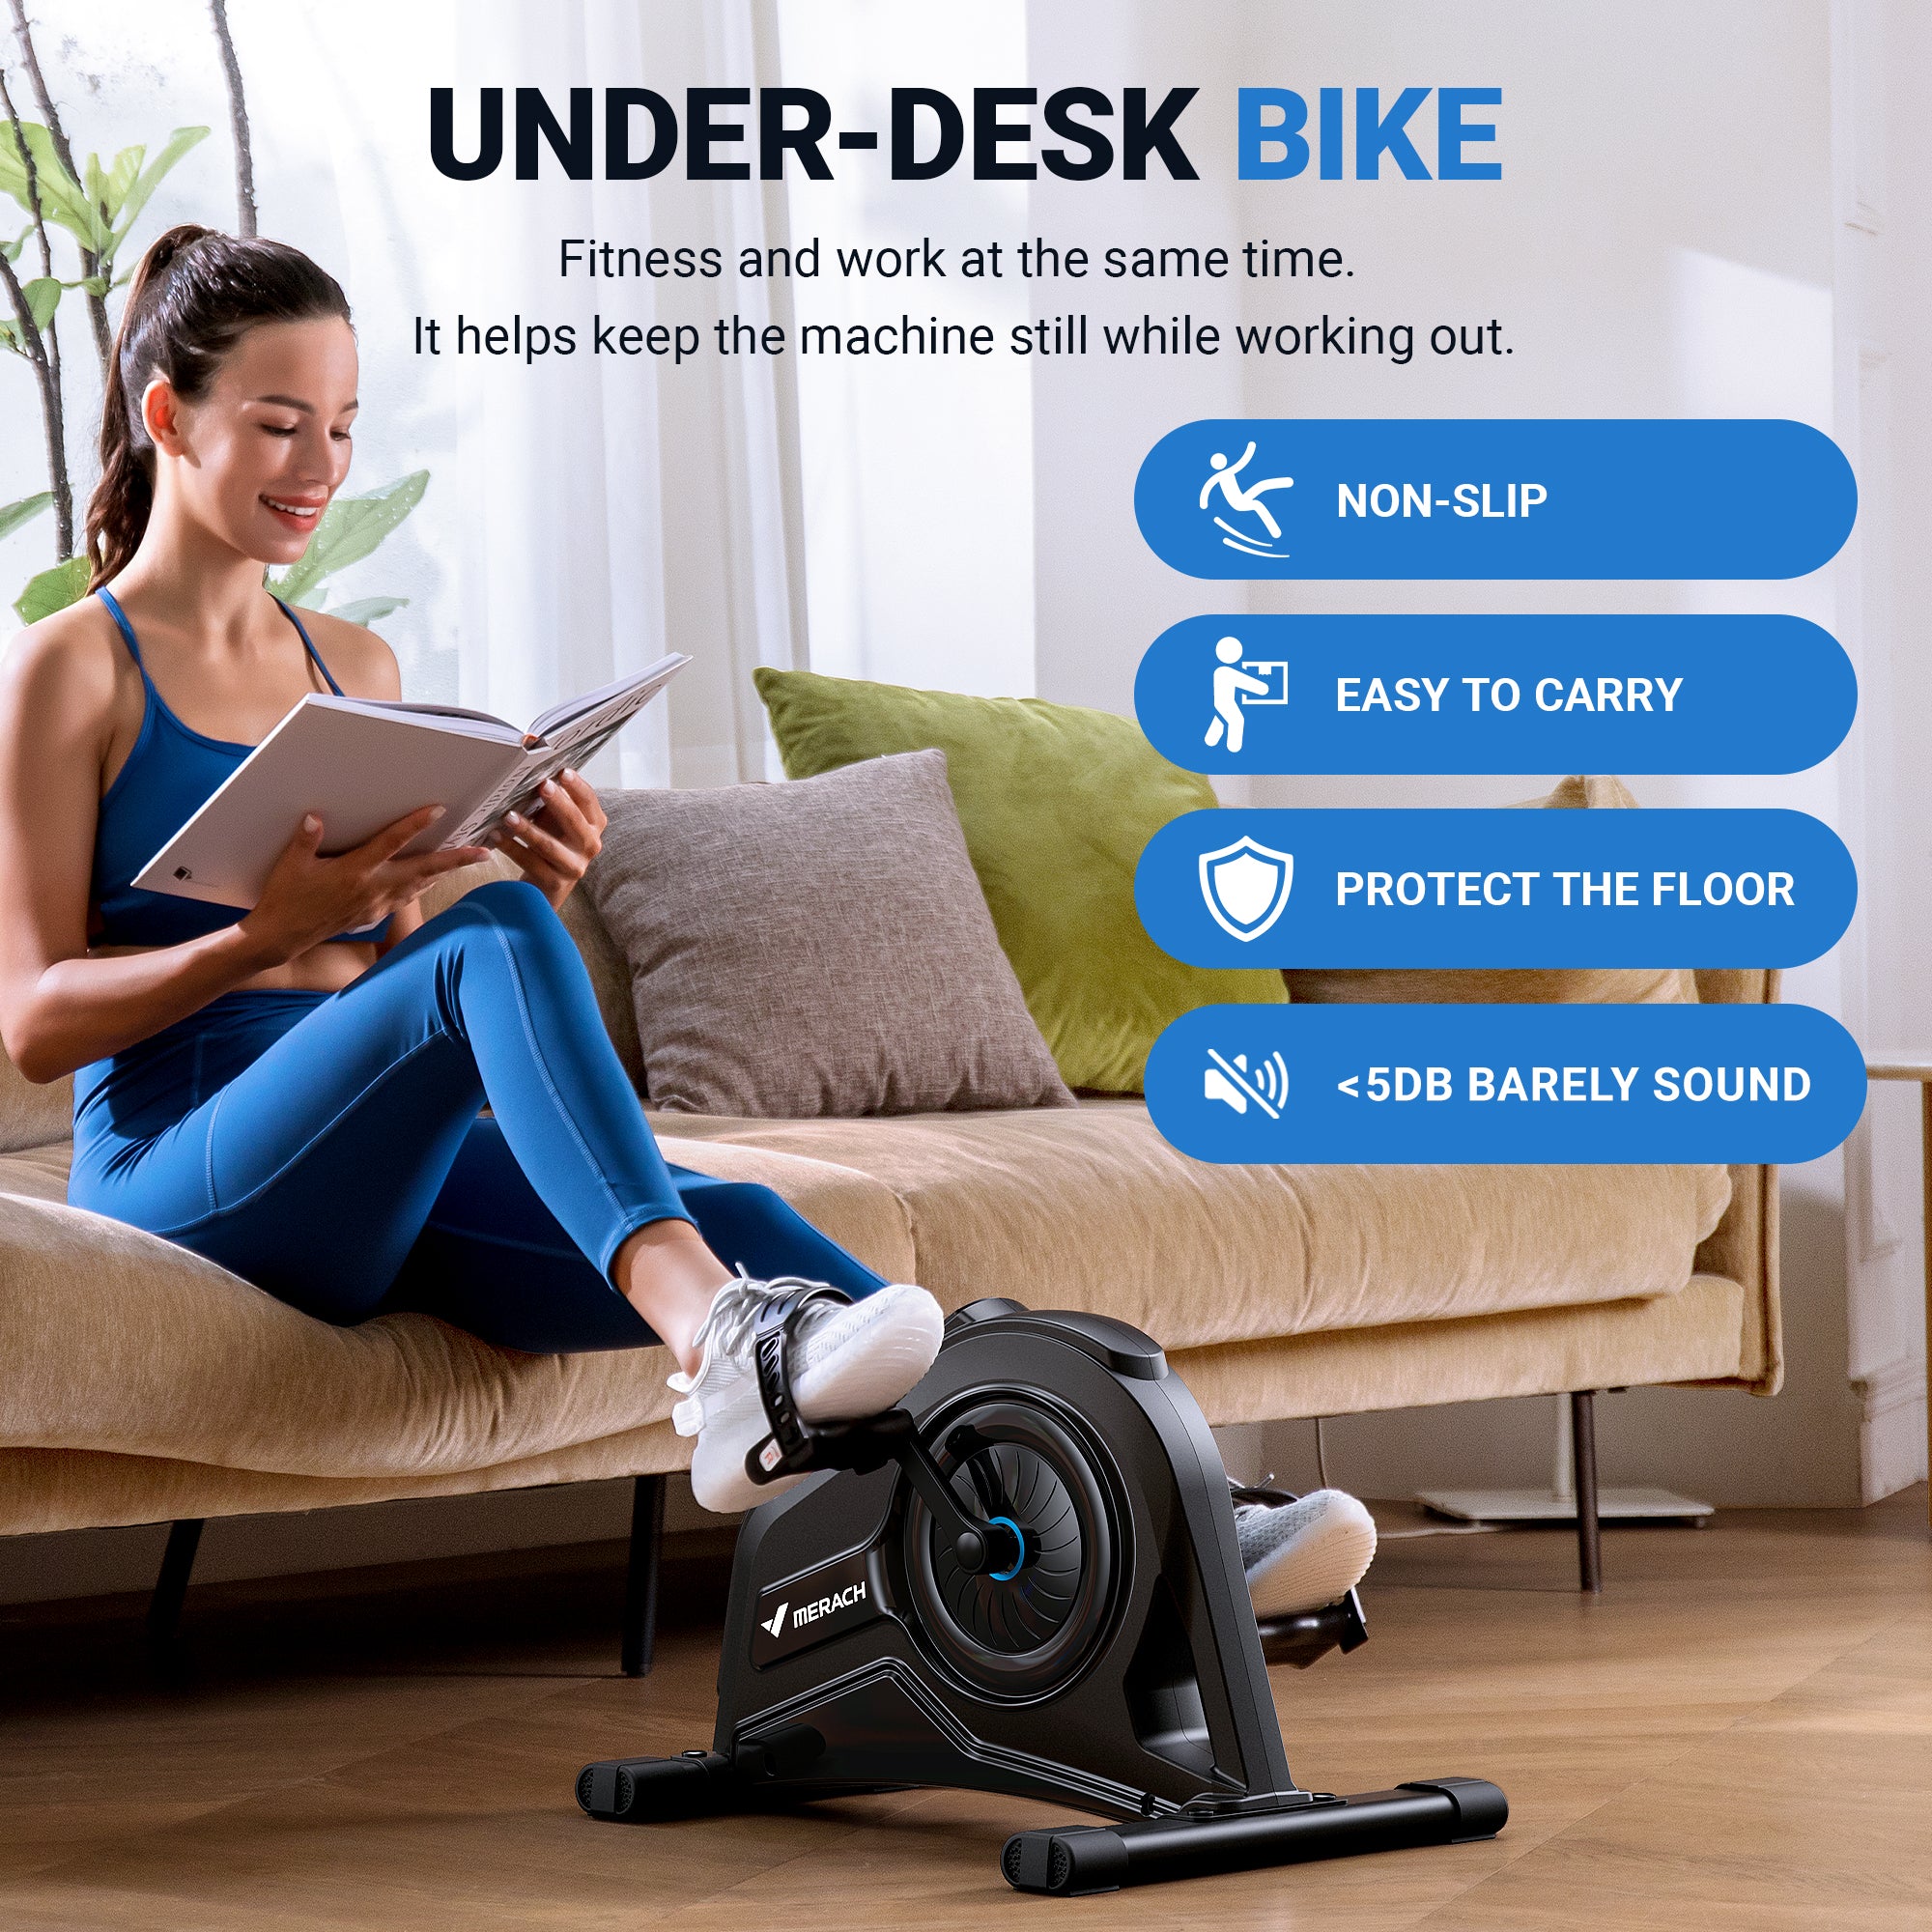 Under desk bike - anyone tried one? - Equipment - TrainerRoad